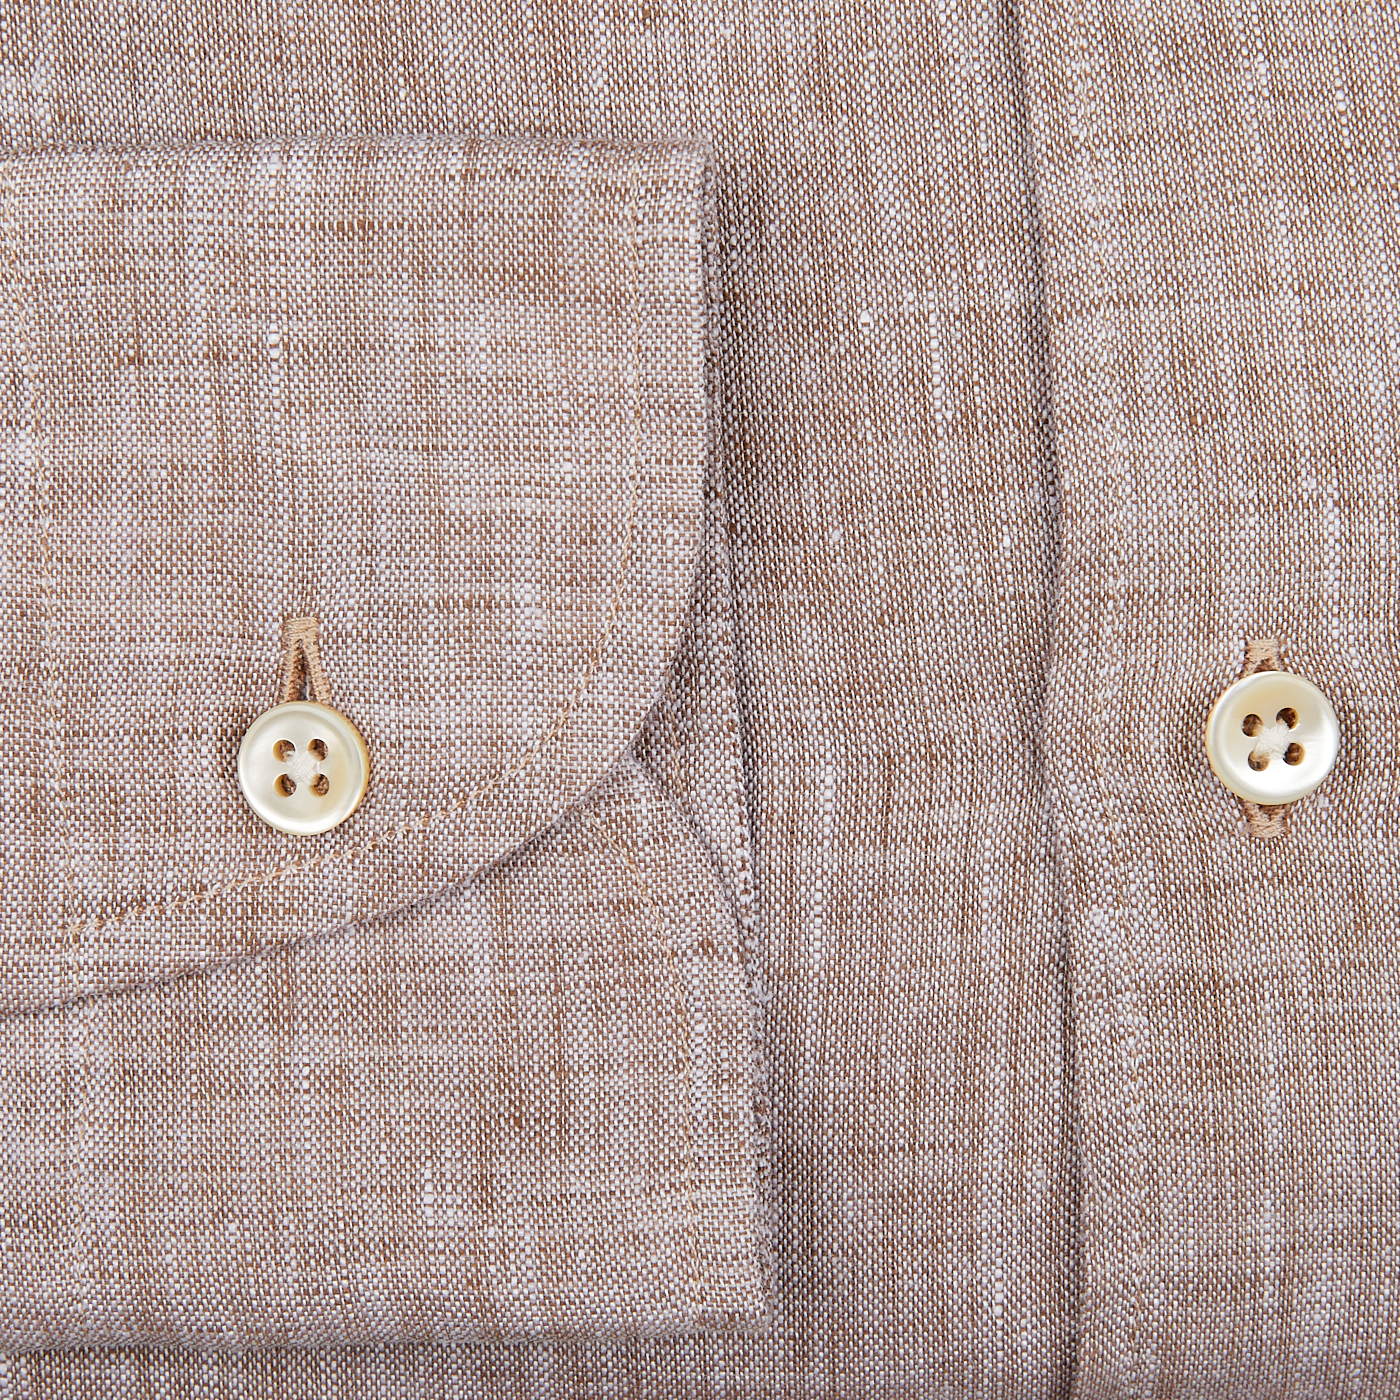 Close-up of a Glanshirt Brown Melange Linen Regular Fit Shirt with two buttons on a garment.